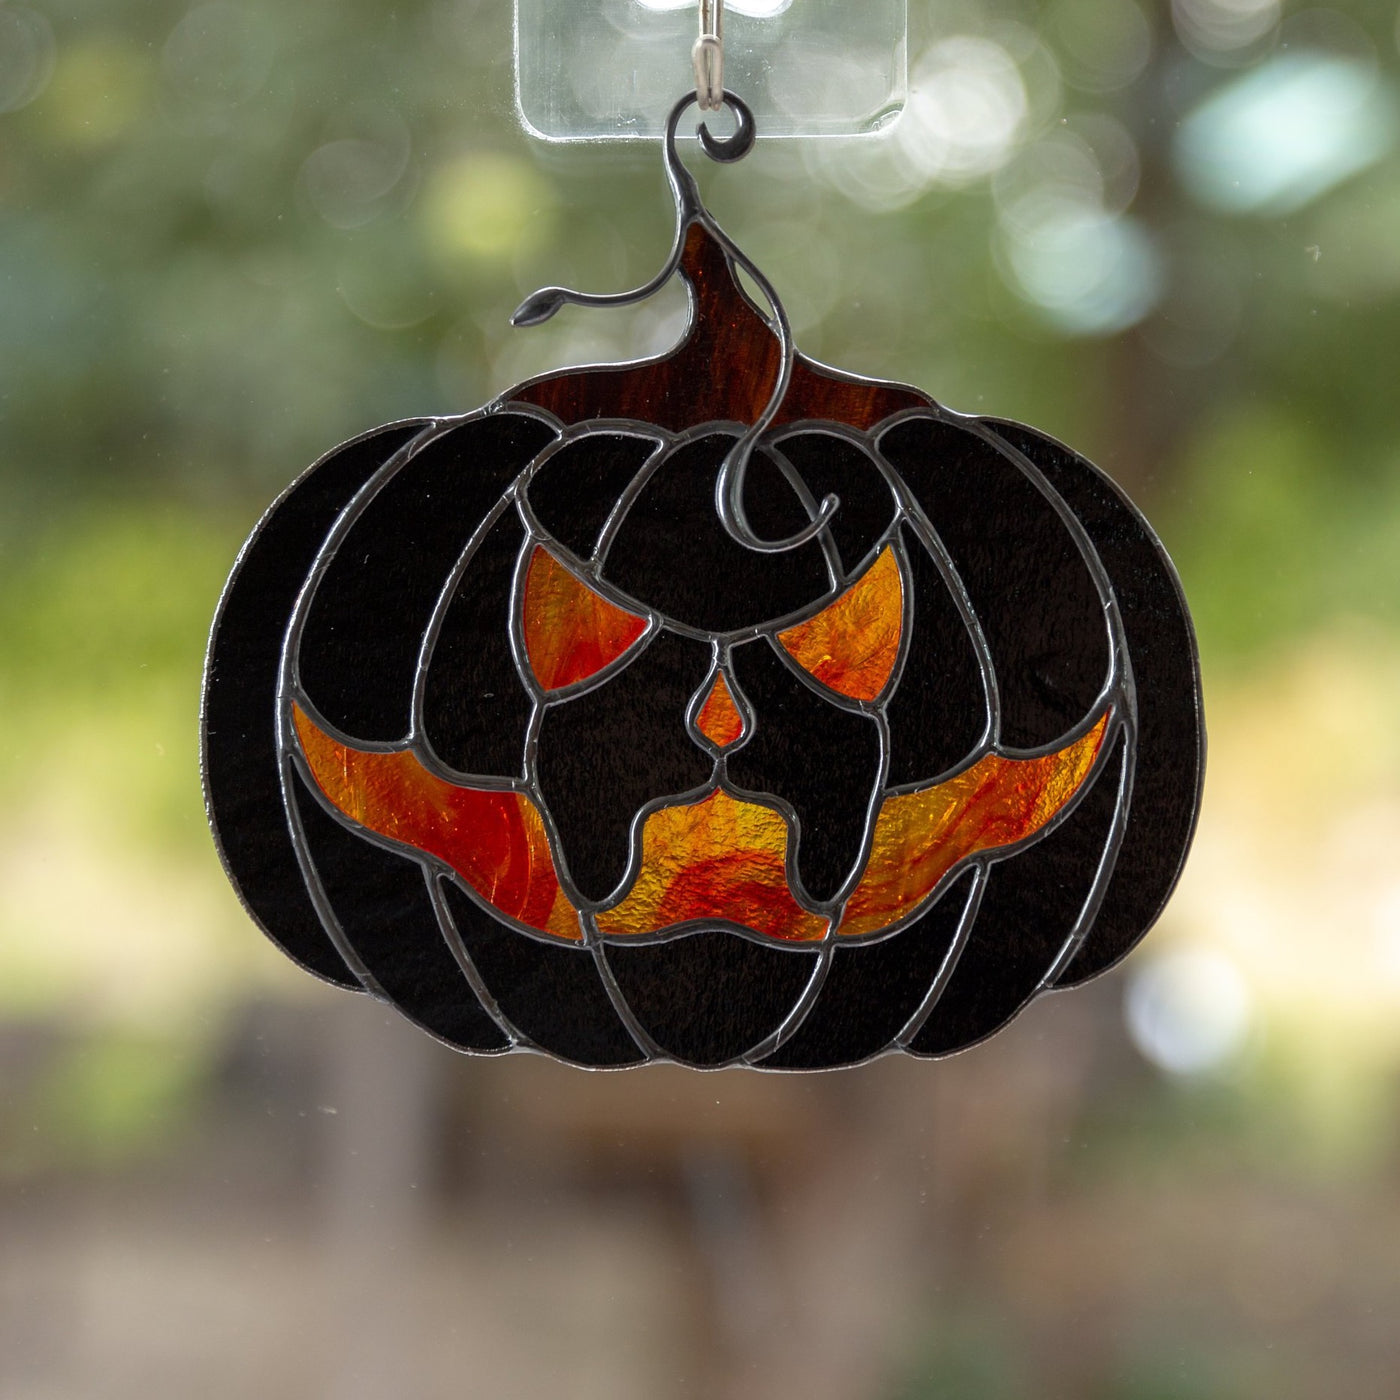 Black pumpkin with creepy face - Halloween stained glass suncatcher